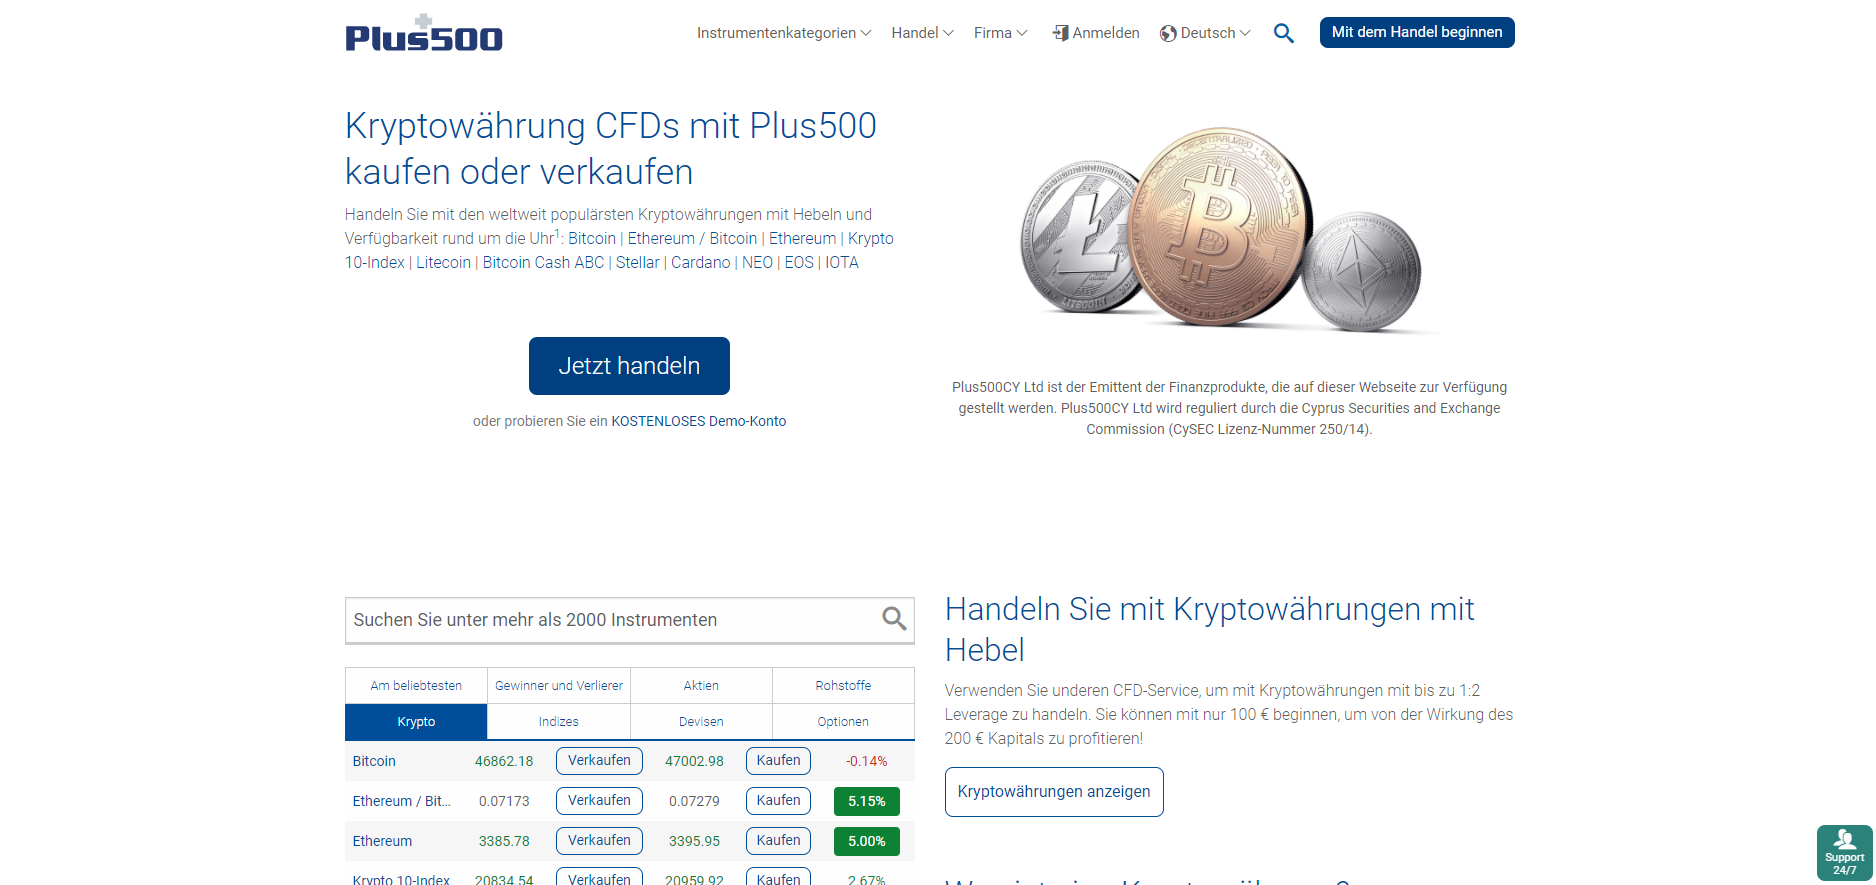 Plus500 Kryptowährungen Plattform (illustrative Preise)